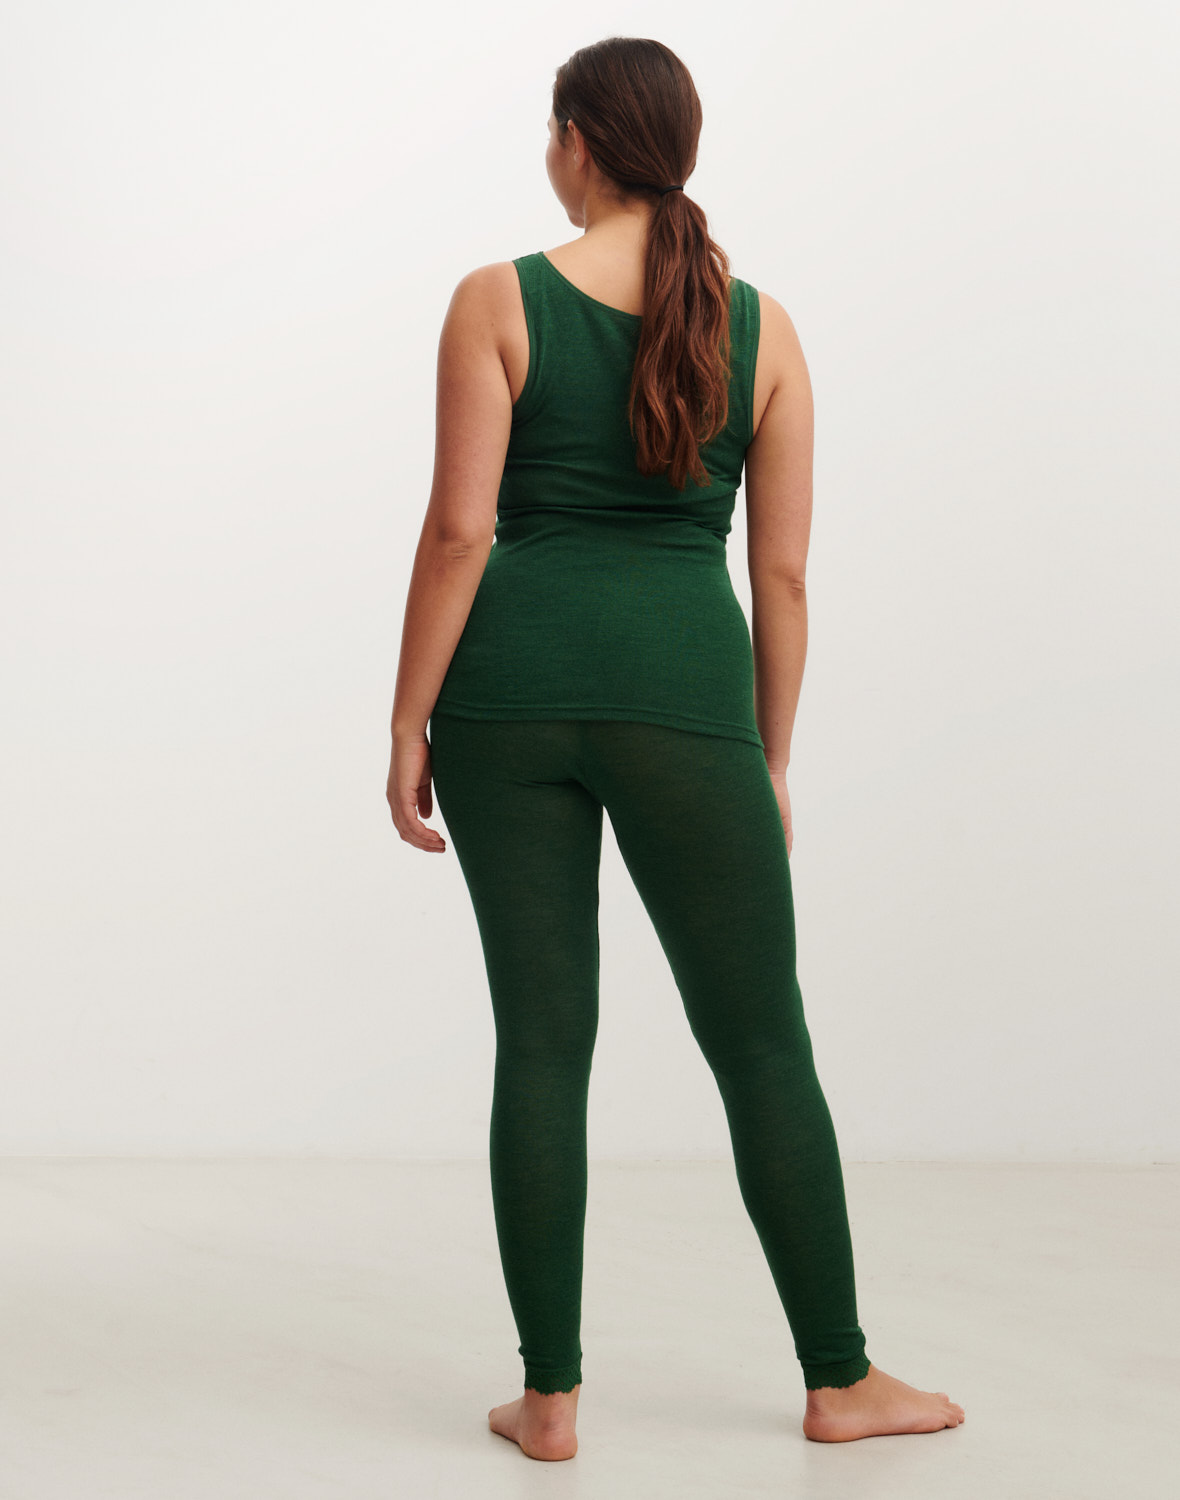 Women's Plain Dark Green Sports Leggings M (6) - Walmart.com